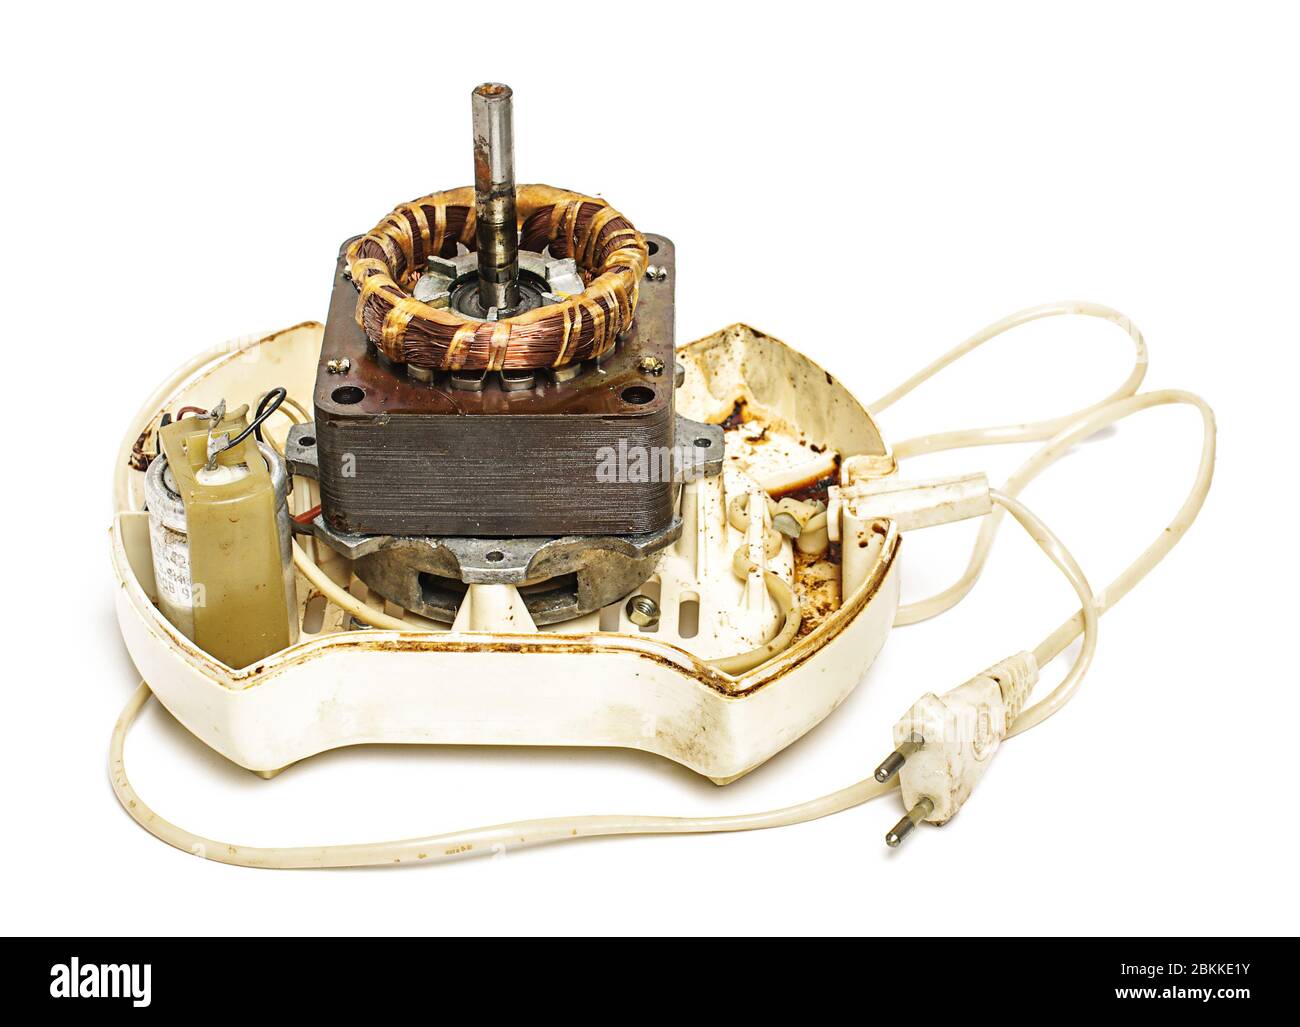 Old juicer motor repair process. Internal parts of juicer motor Stock Photo